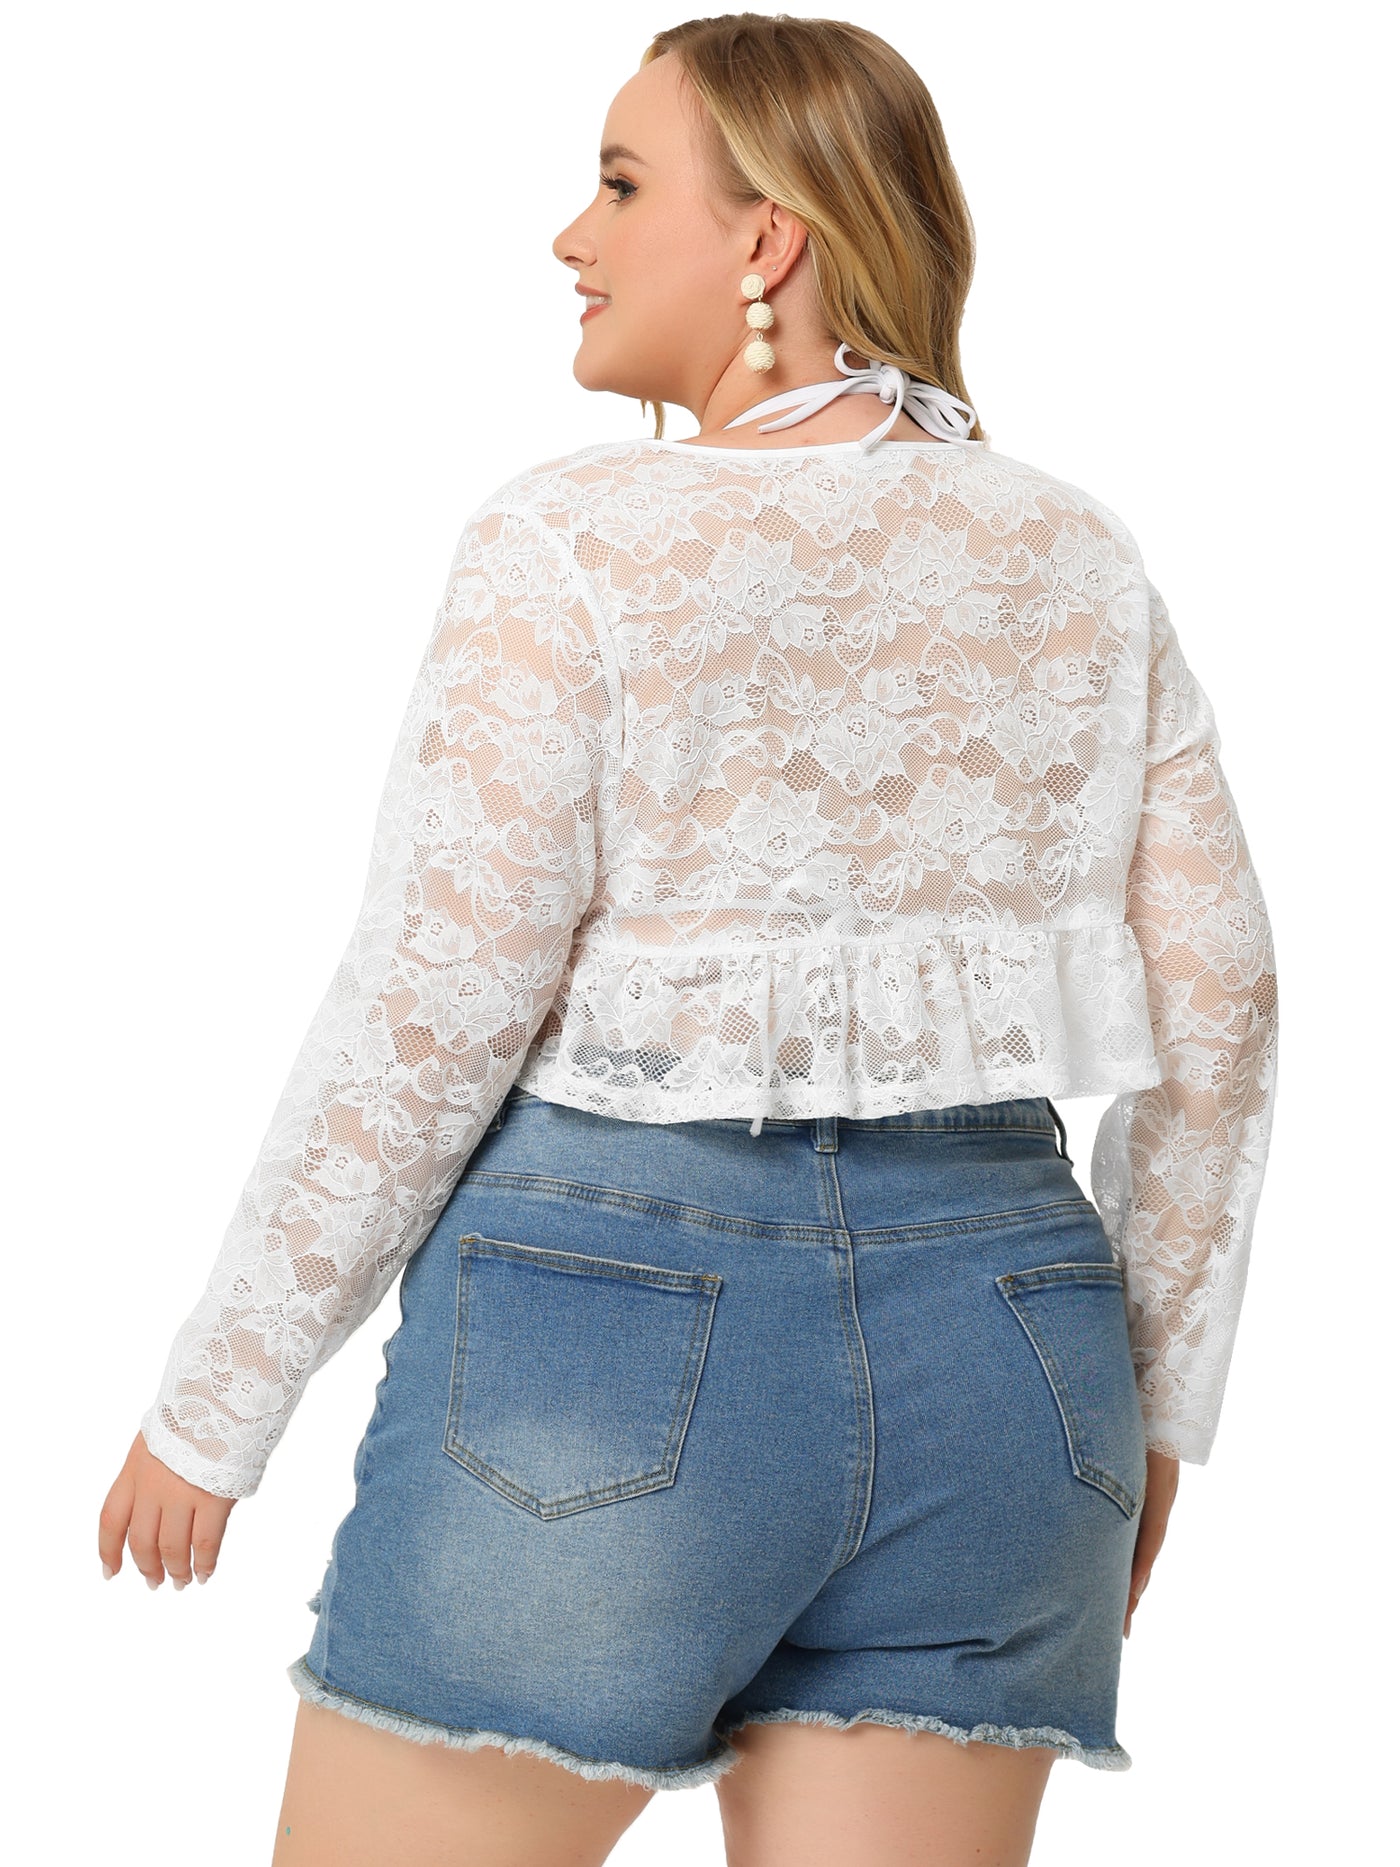 Bublédon Plus Size Shrug for Women Bolero Crop Summer Lace Sheer Loose Cardigans